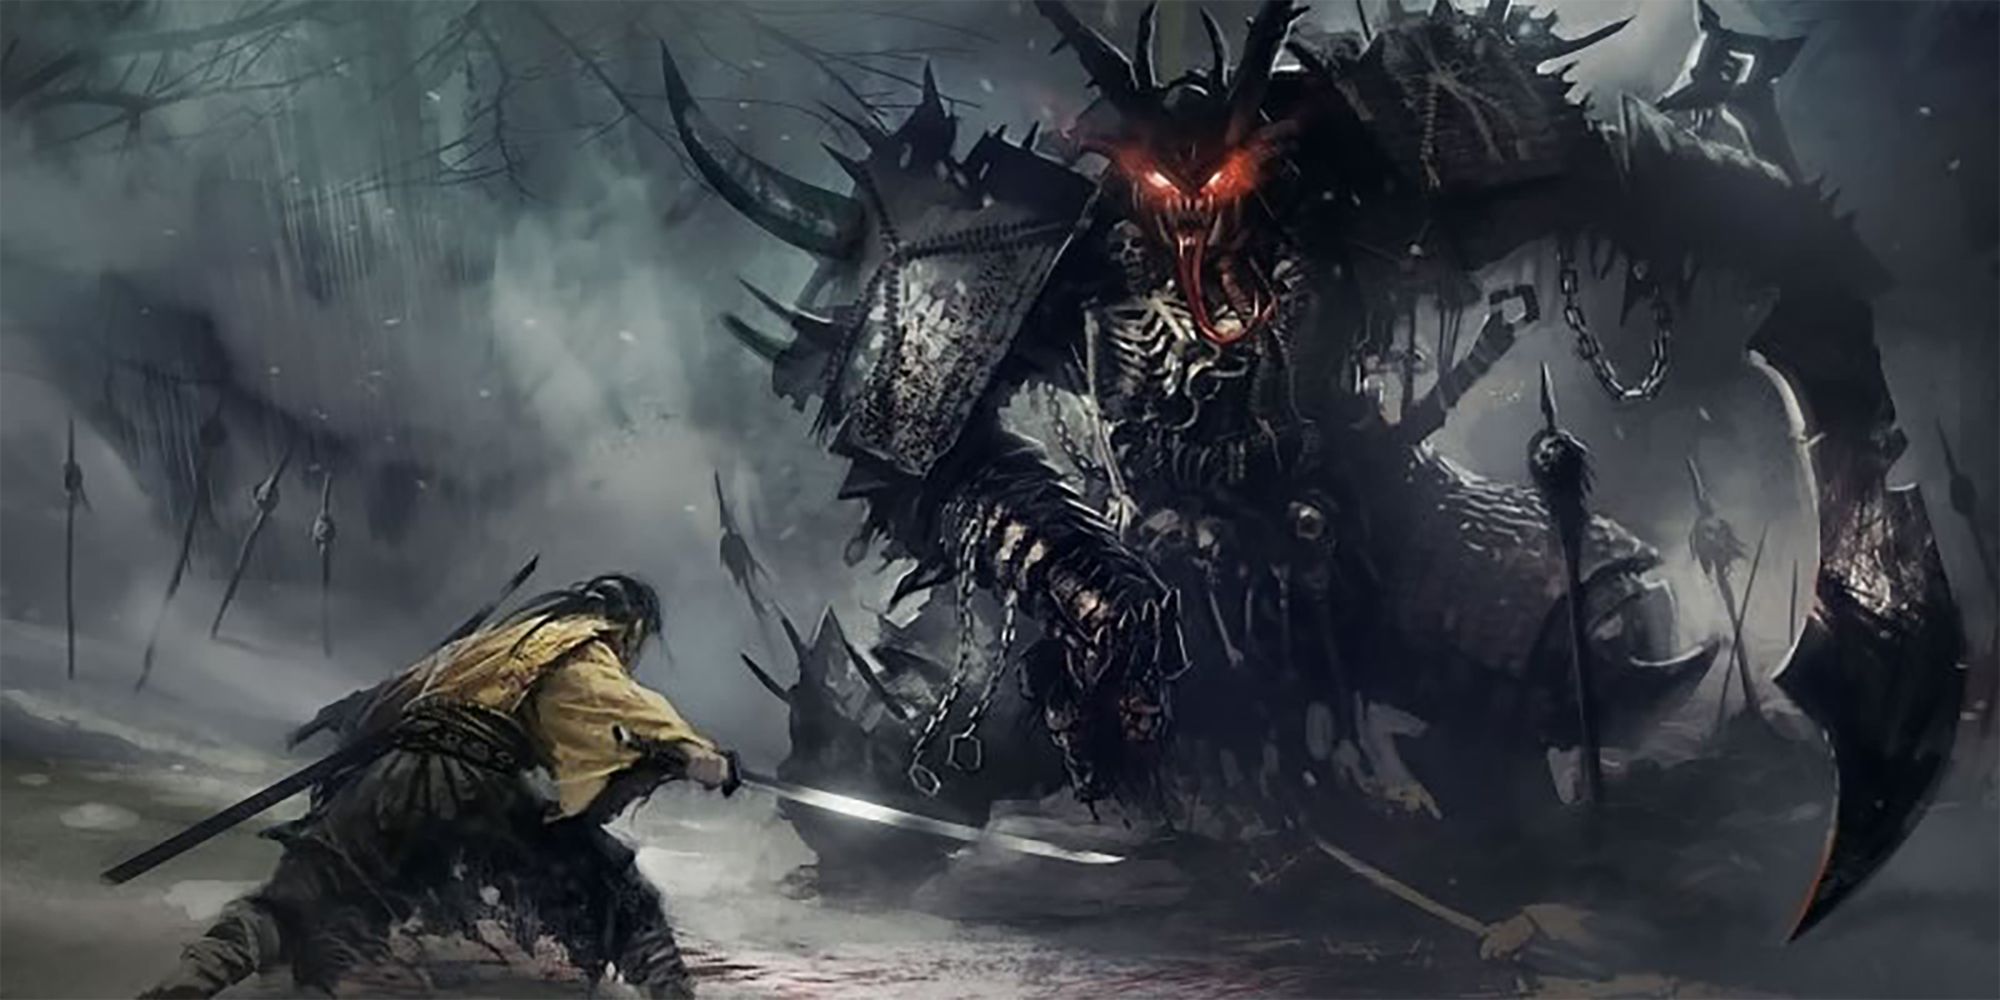 A samurai facing off against a giant monster